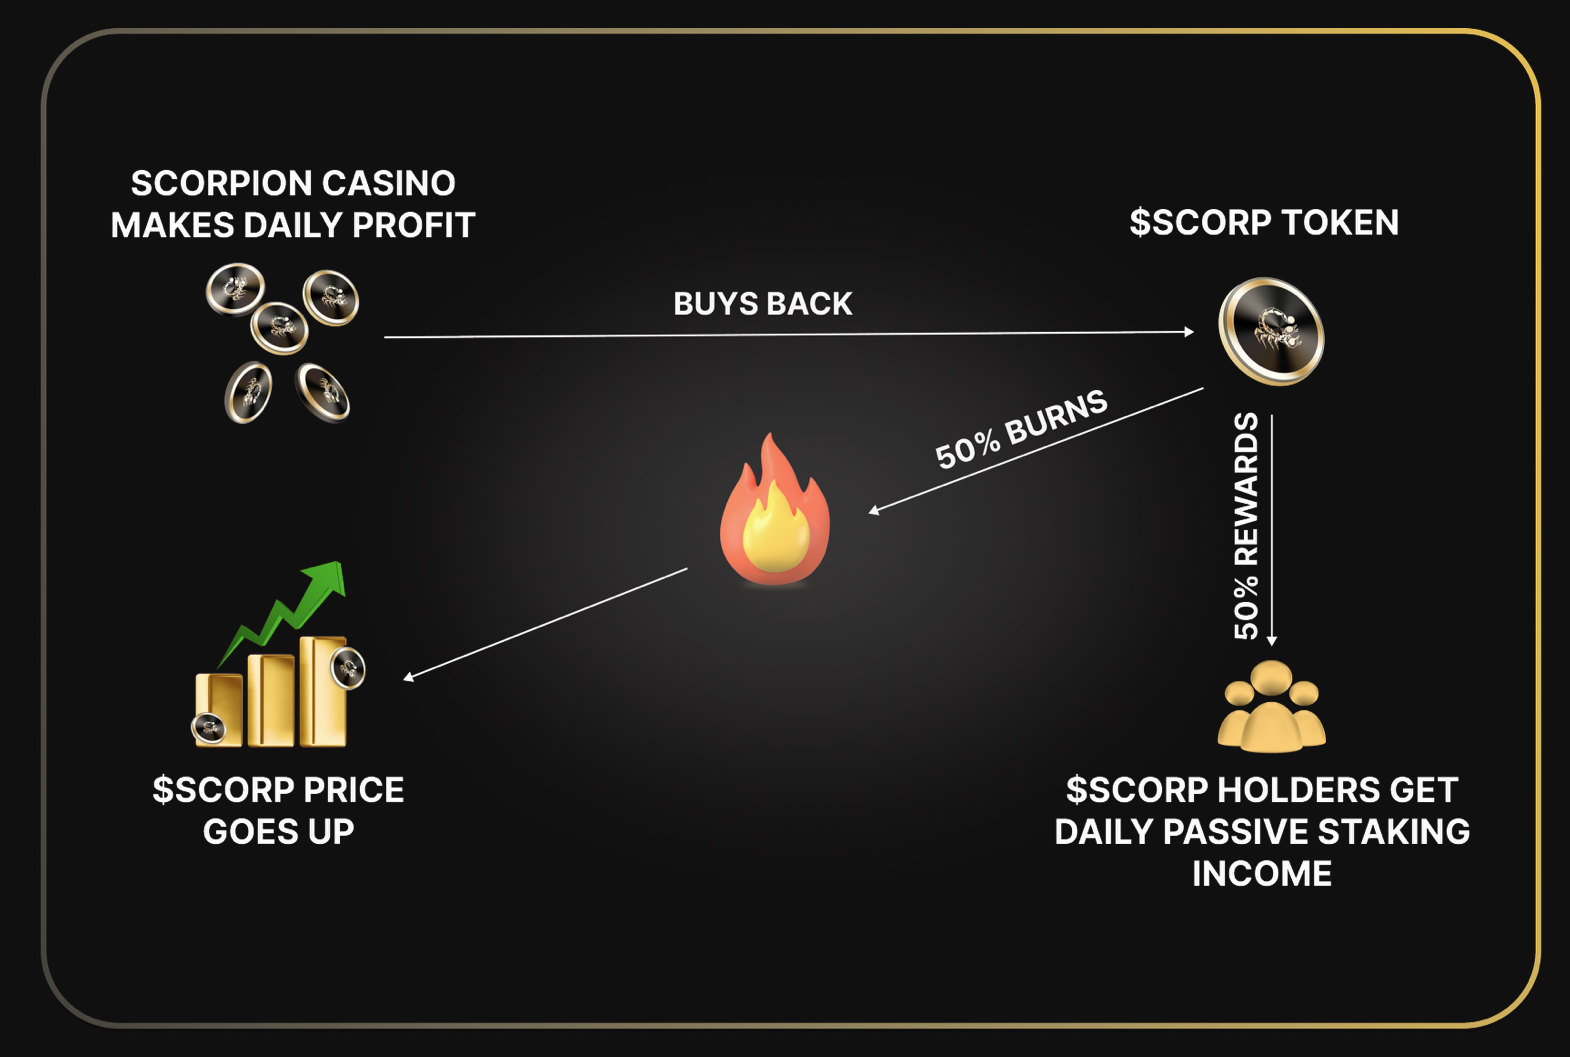 Scorpion Casino New rewards